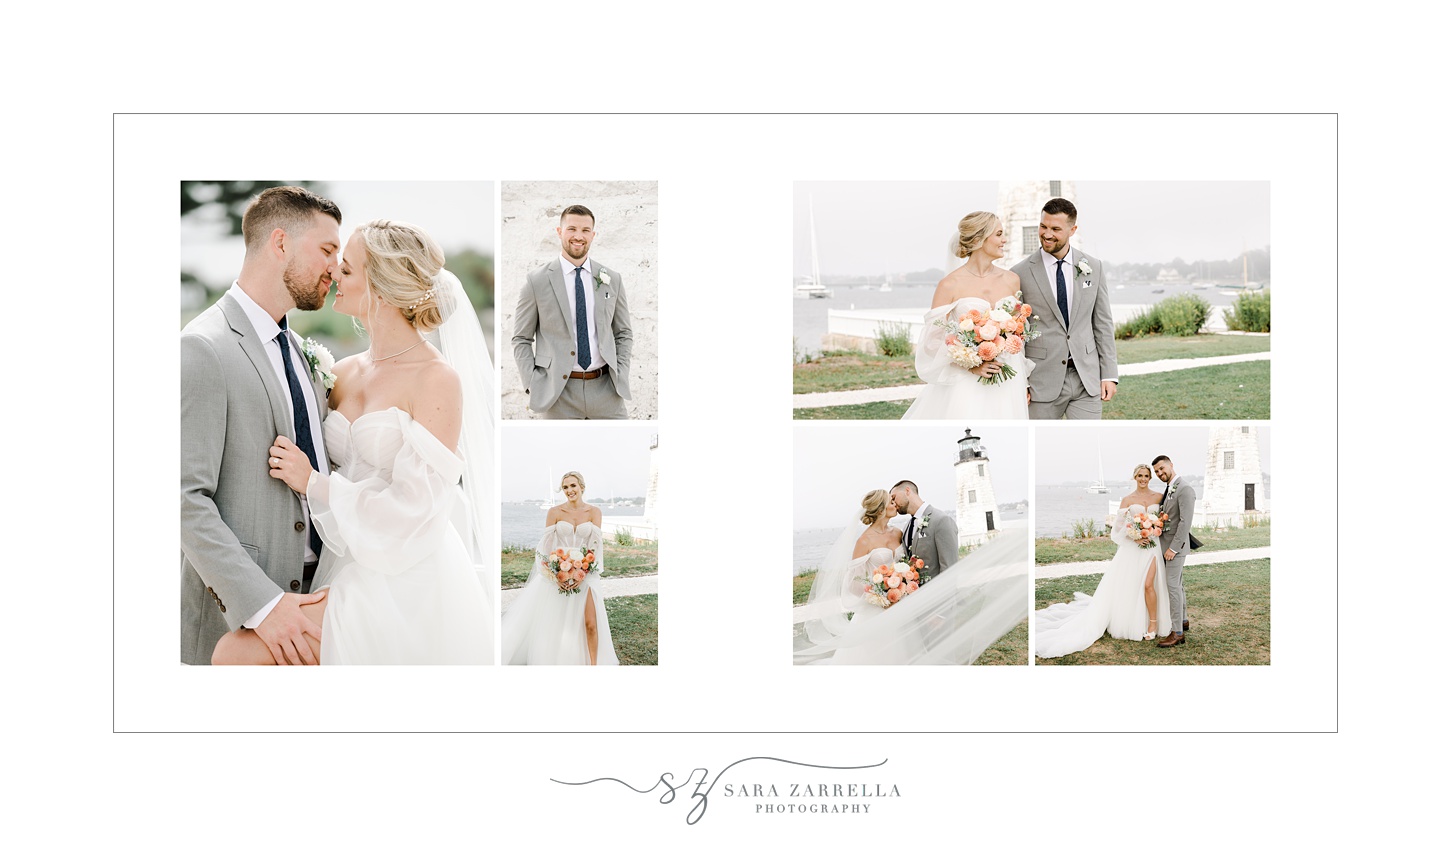 storybook album for autumn Newport Harbor Island Resort wedding designed by Sara Zarrella Photography